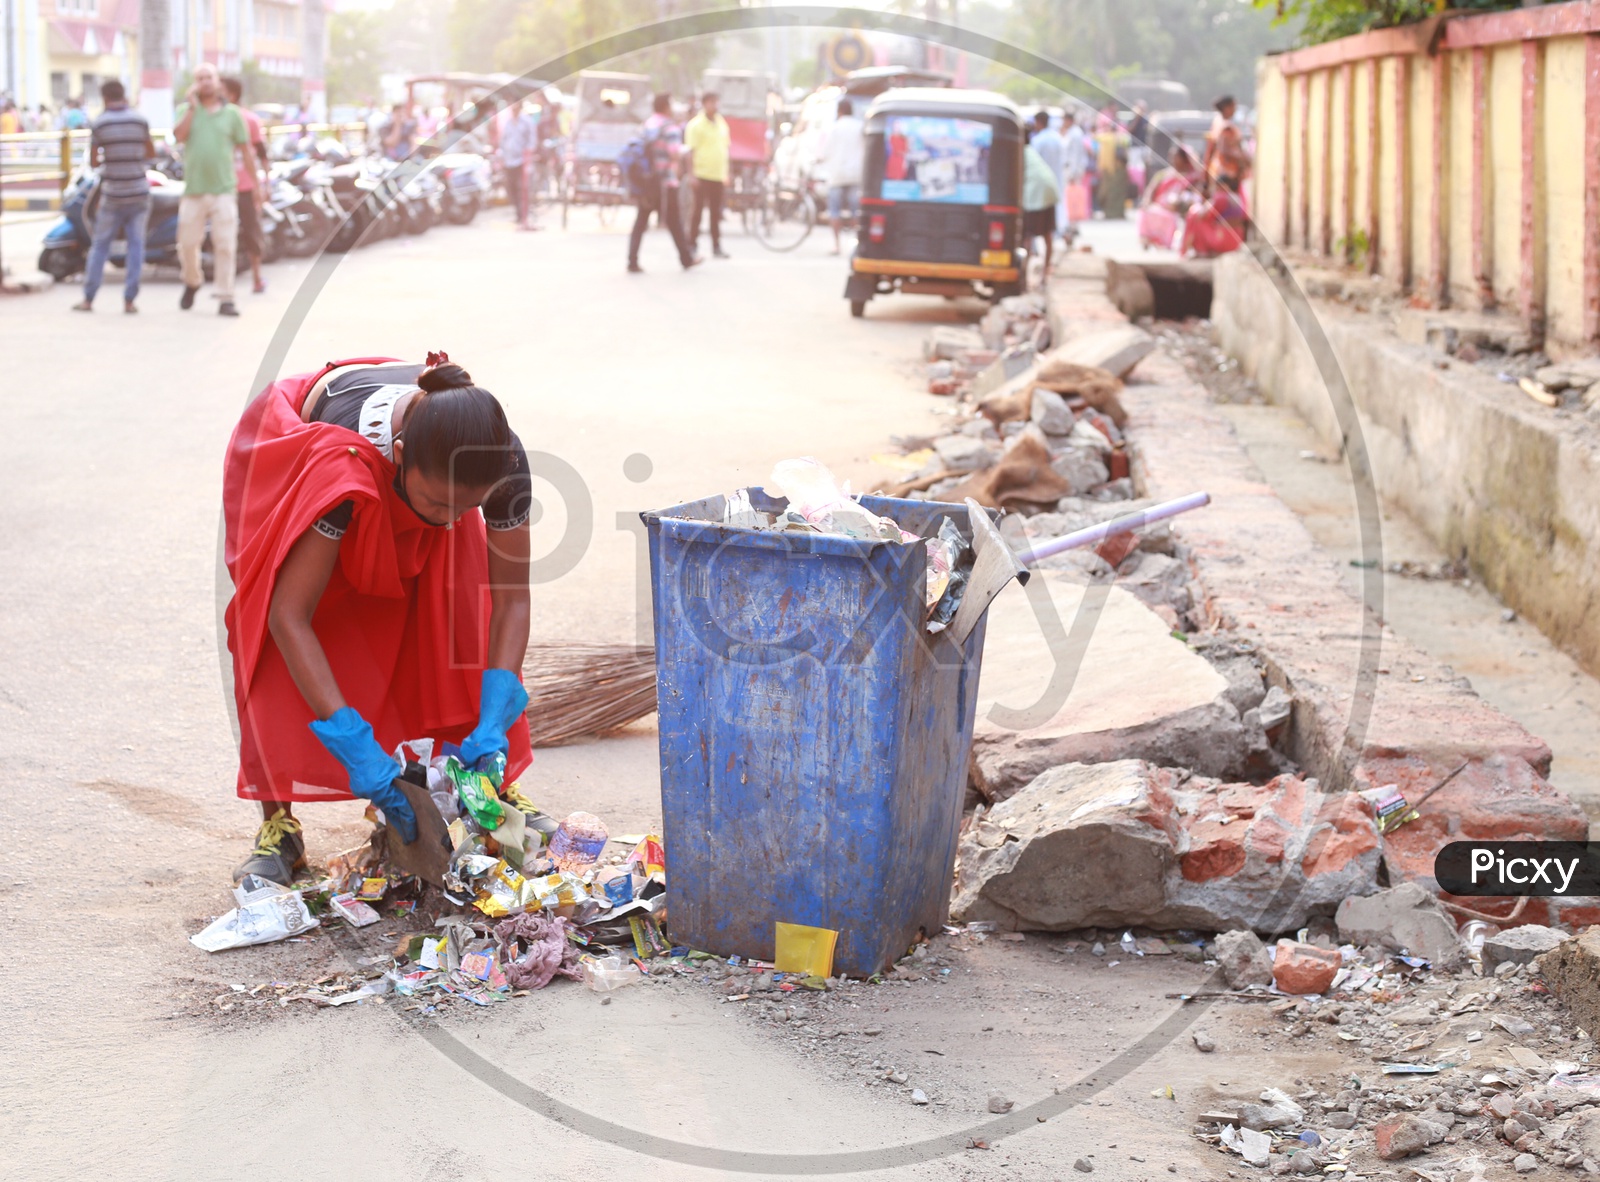 A woman sweeping garbage in Guwahati city.